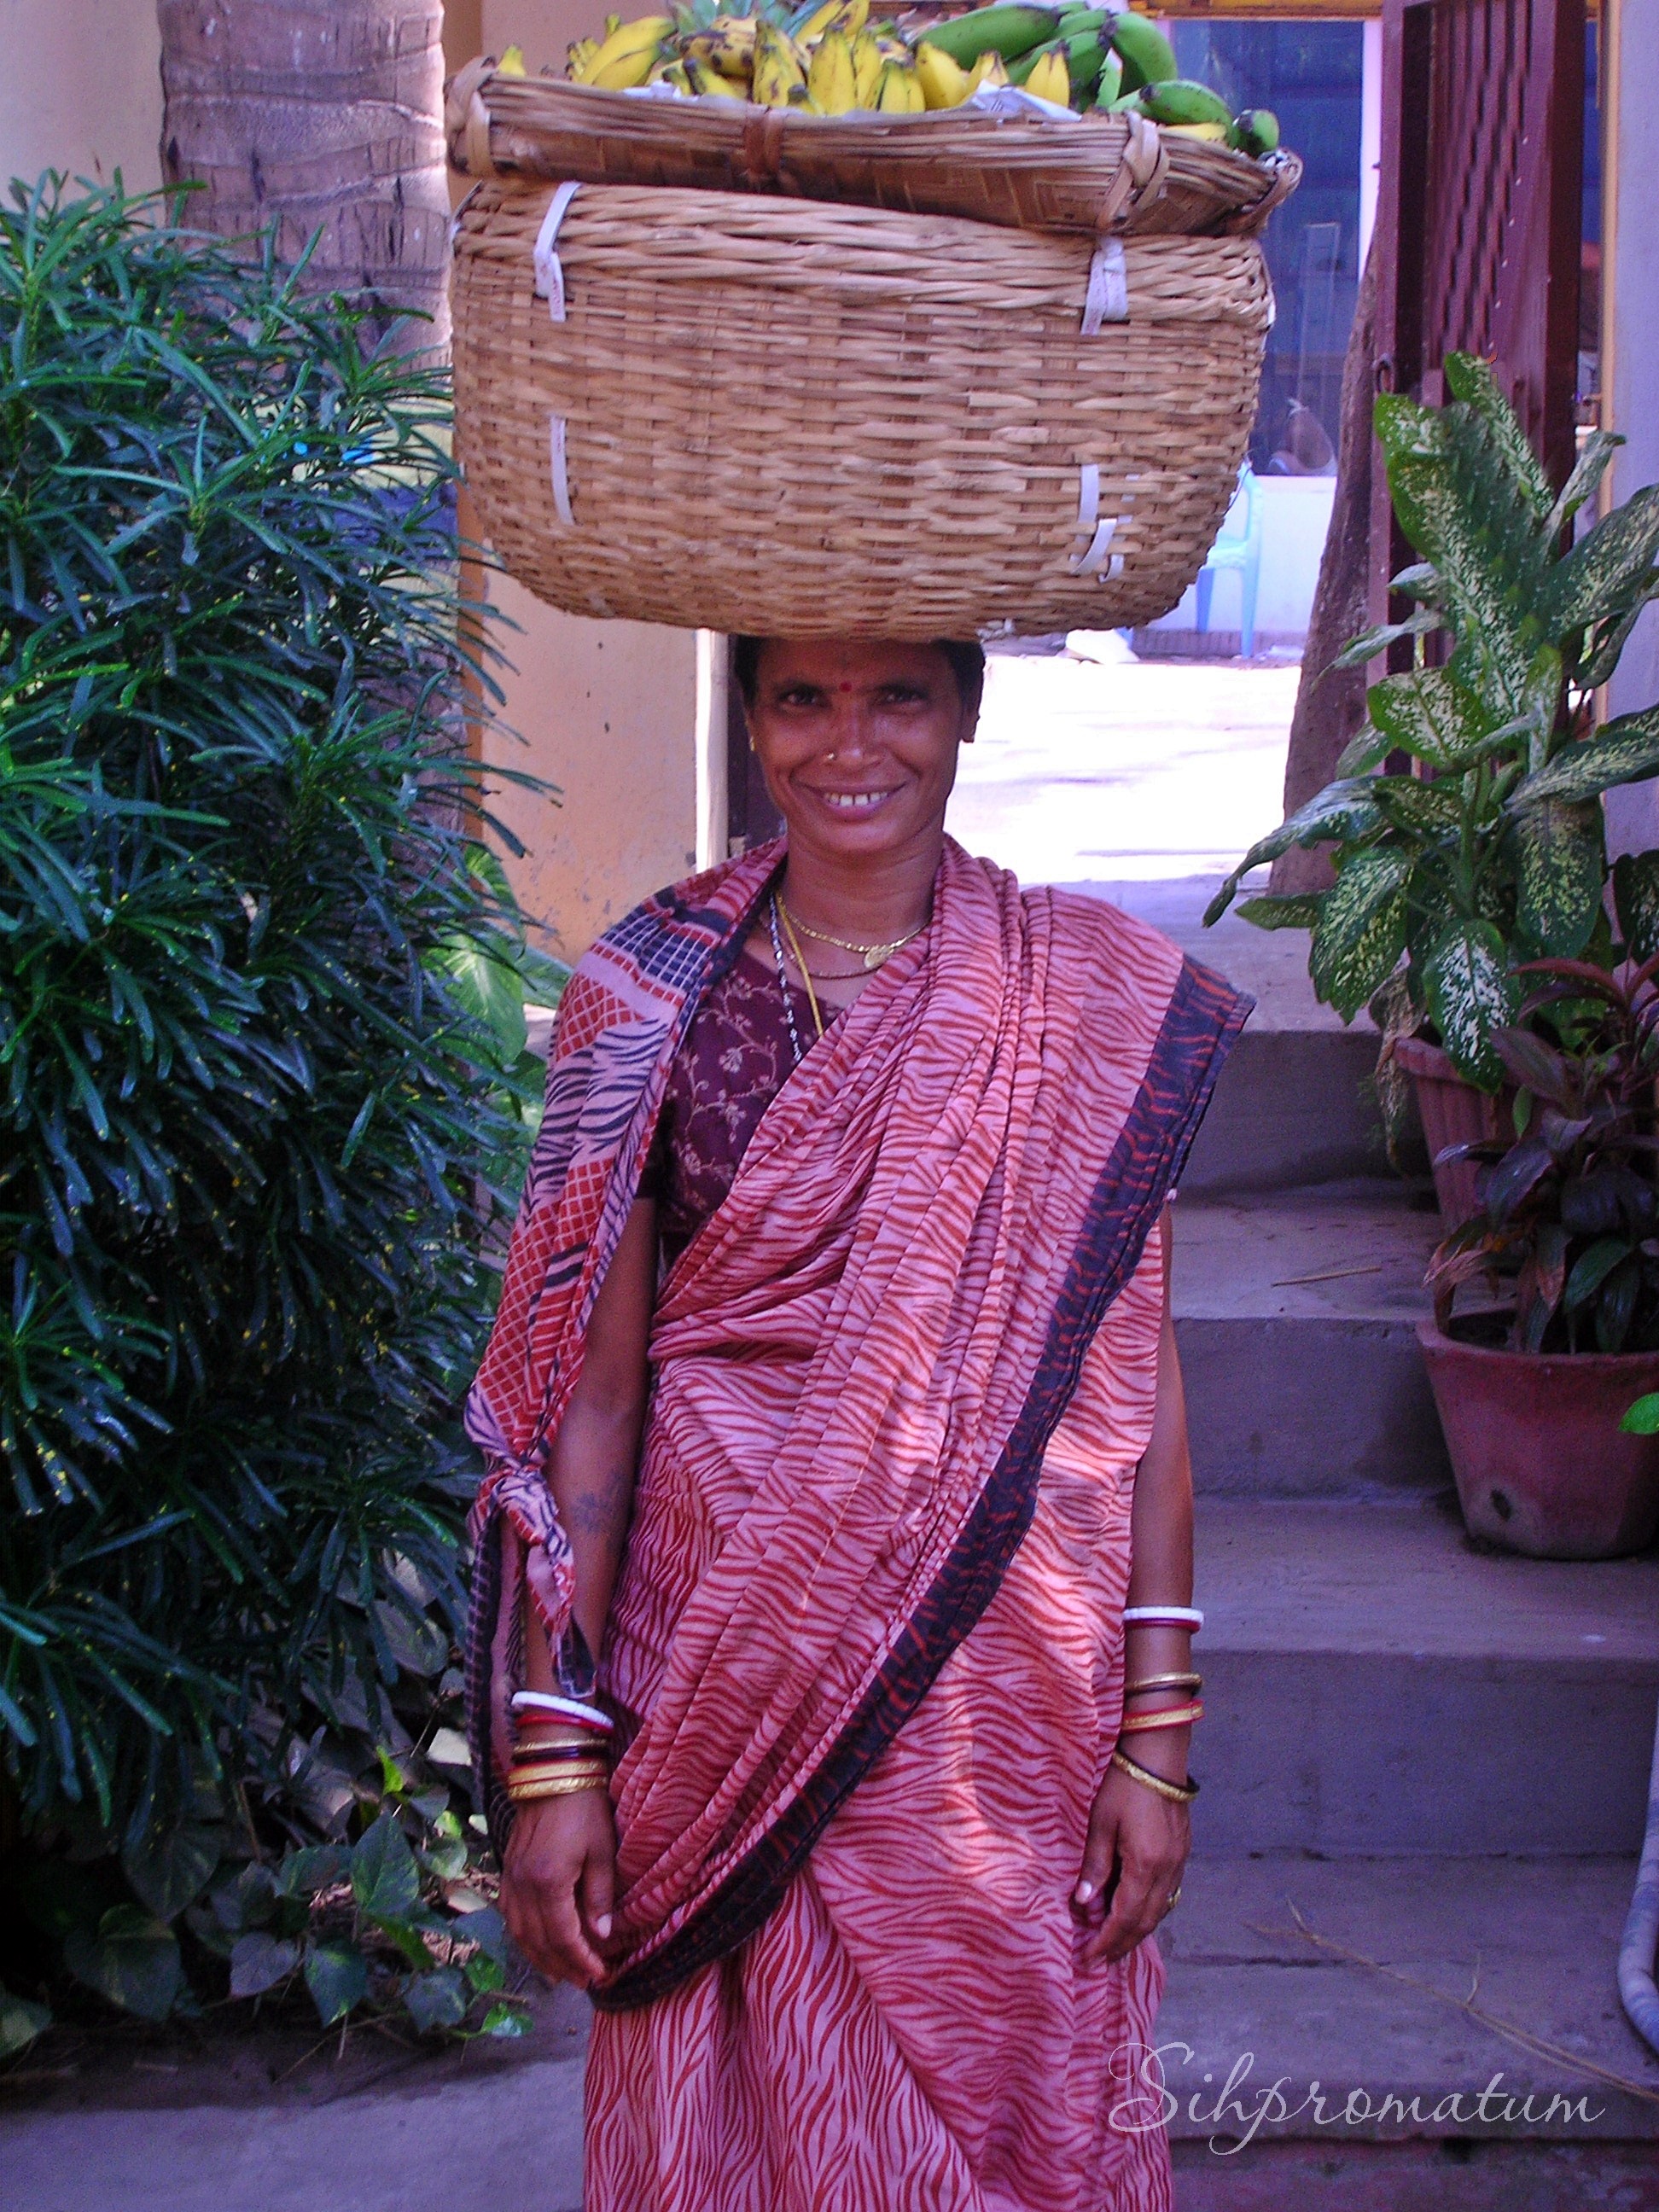 Local-woman-selling-bananas-in-Puri-India